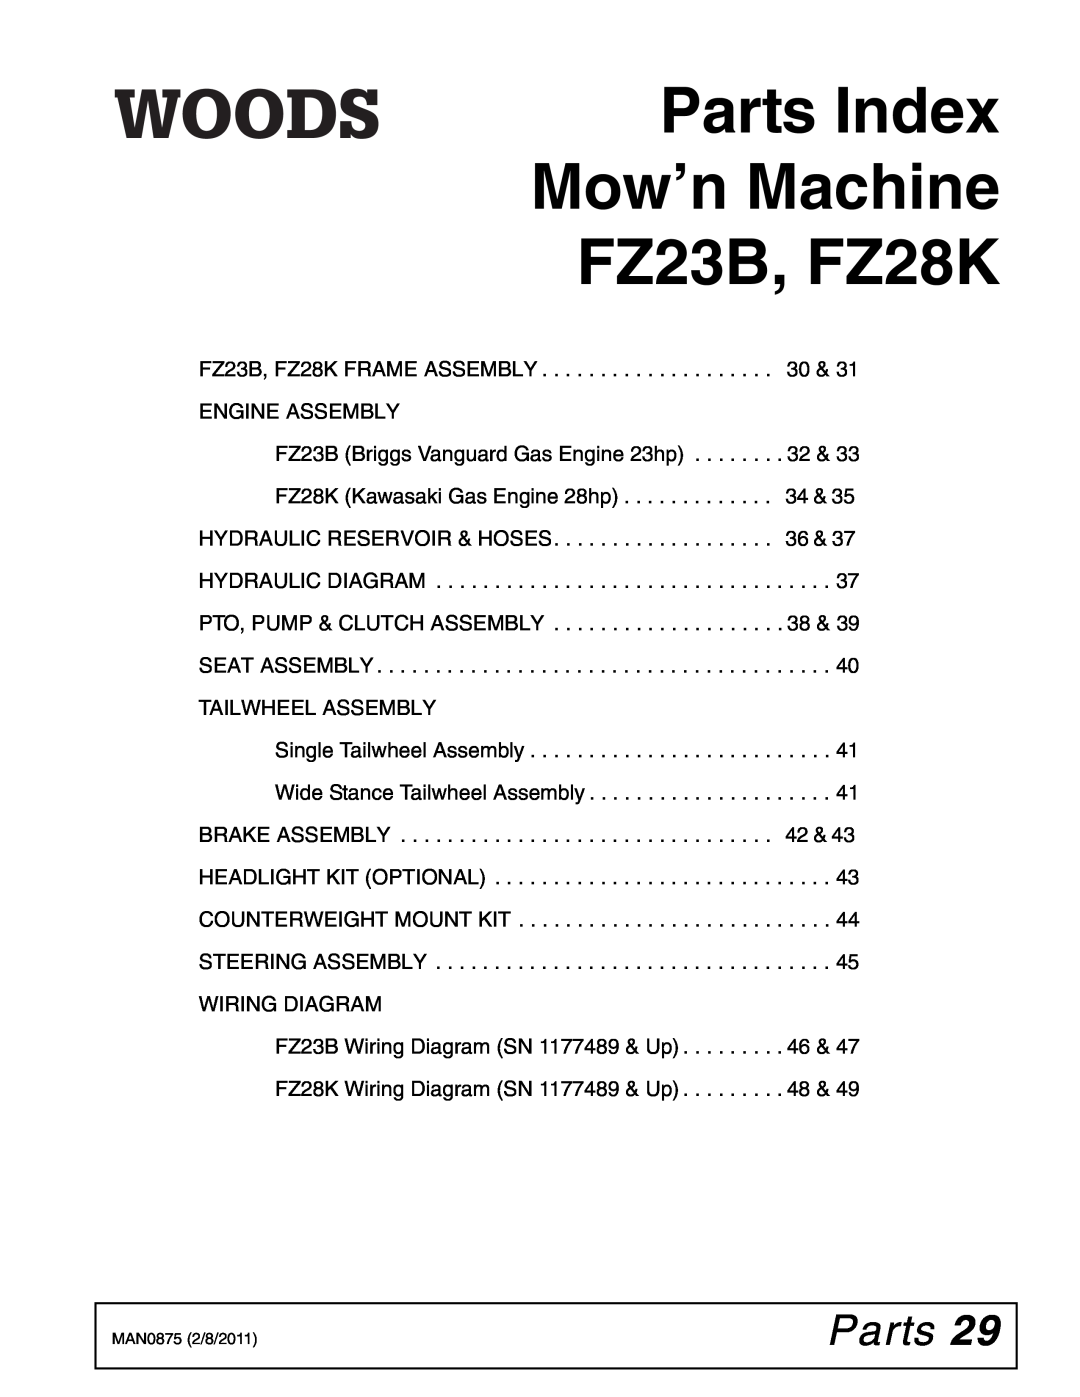 Woods Equipment manual Parts Index Mow’n Machine FZ23B, FZ28K 